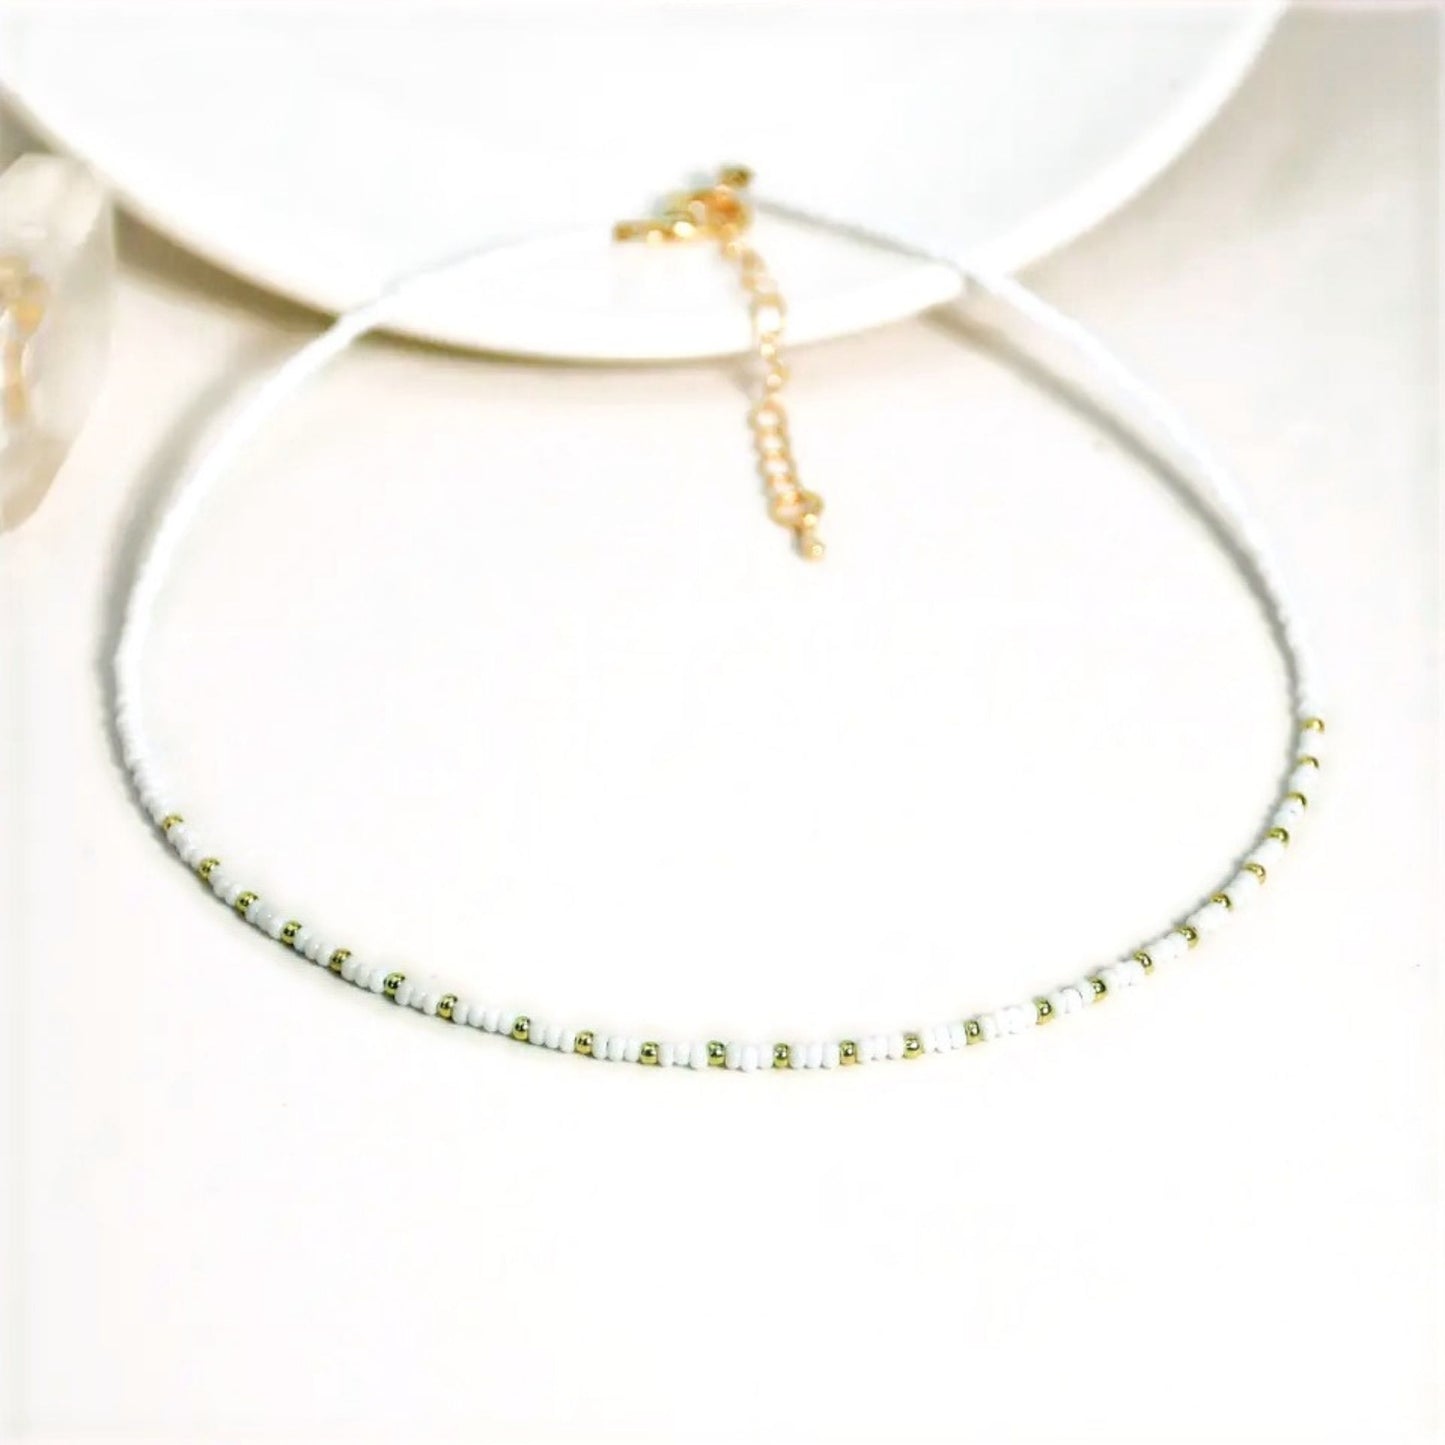 Handmade Pretty Rainbow Crystal Miyuki Beaded Necklace